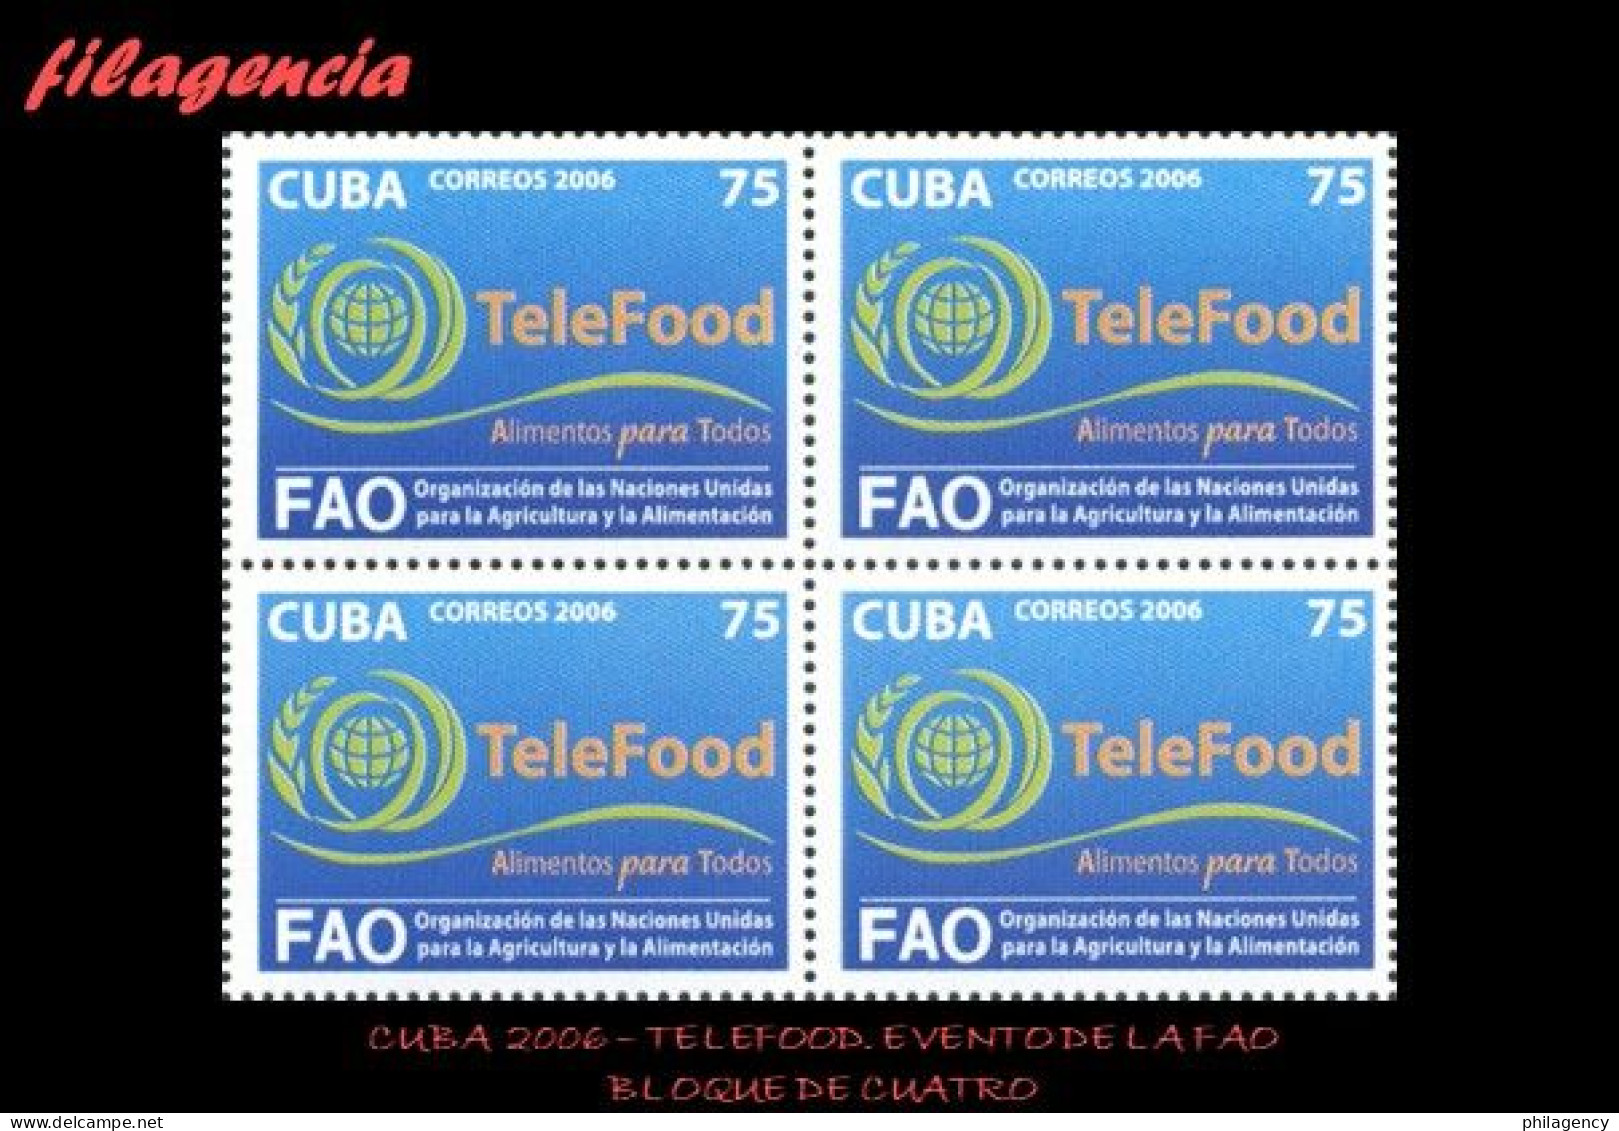 CUBA. BLOQUES DE CUATRO. 2006-29 EVENTO DE LA FAO TELEFOOD - Unused Stamps